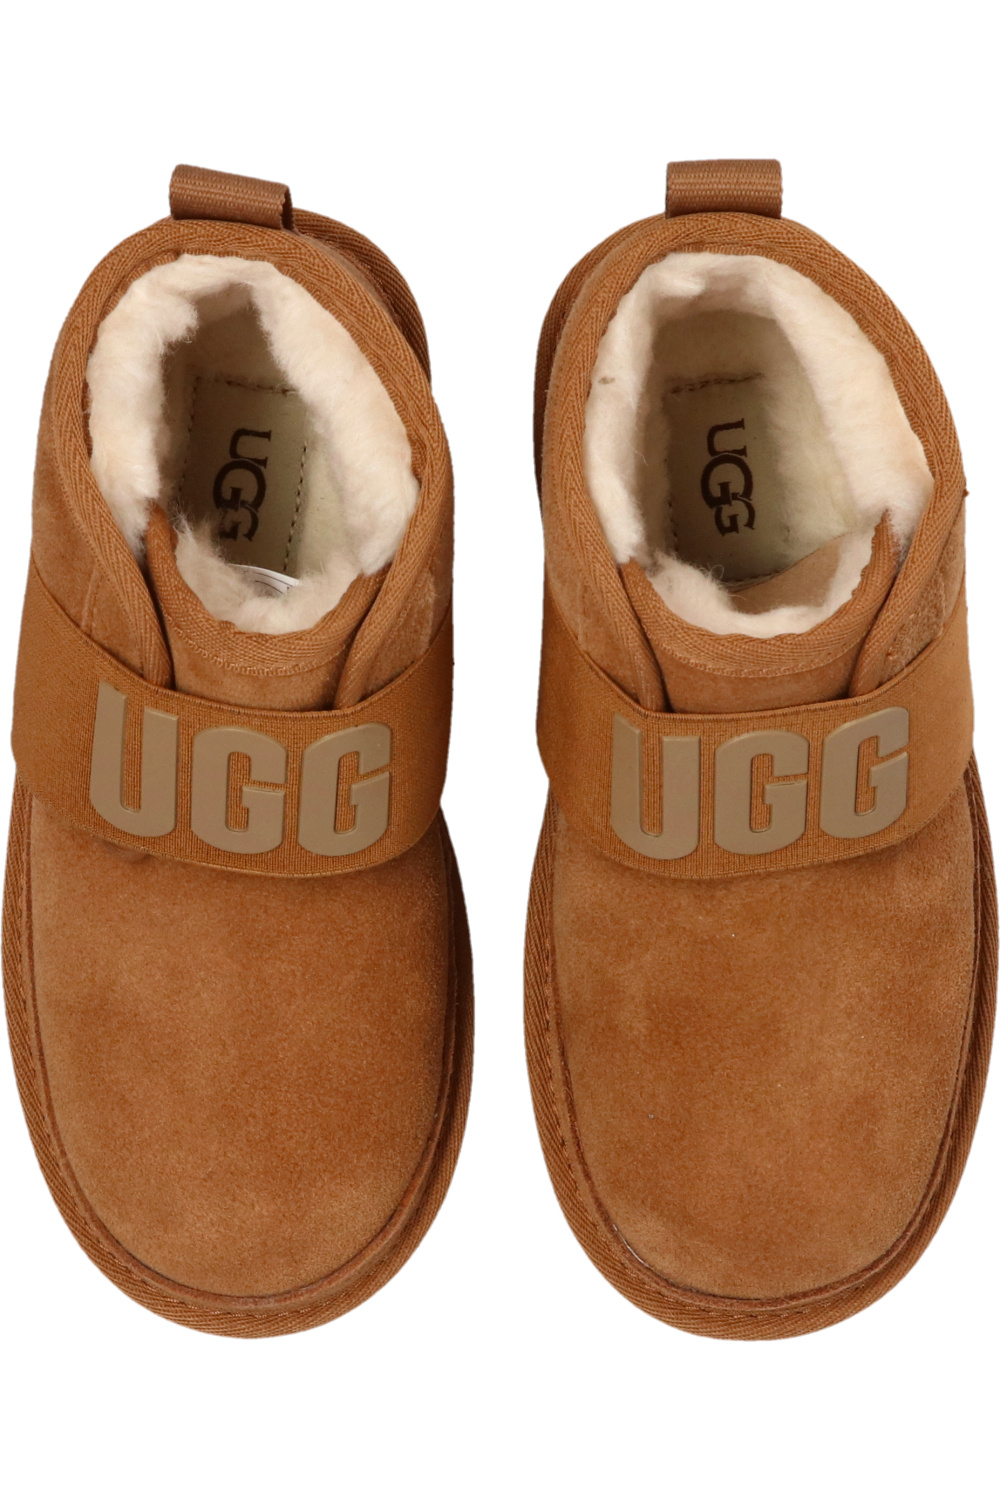 ugg Brown Kids Suede boots